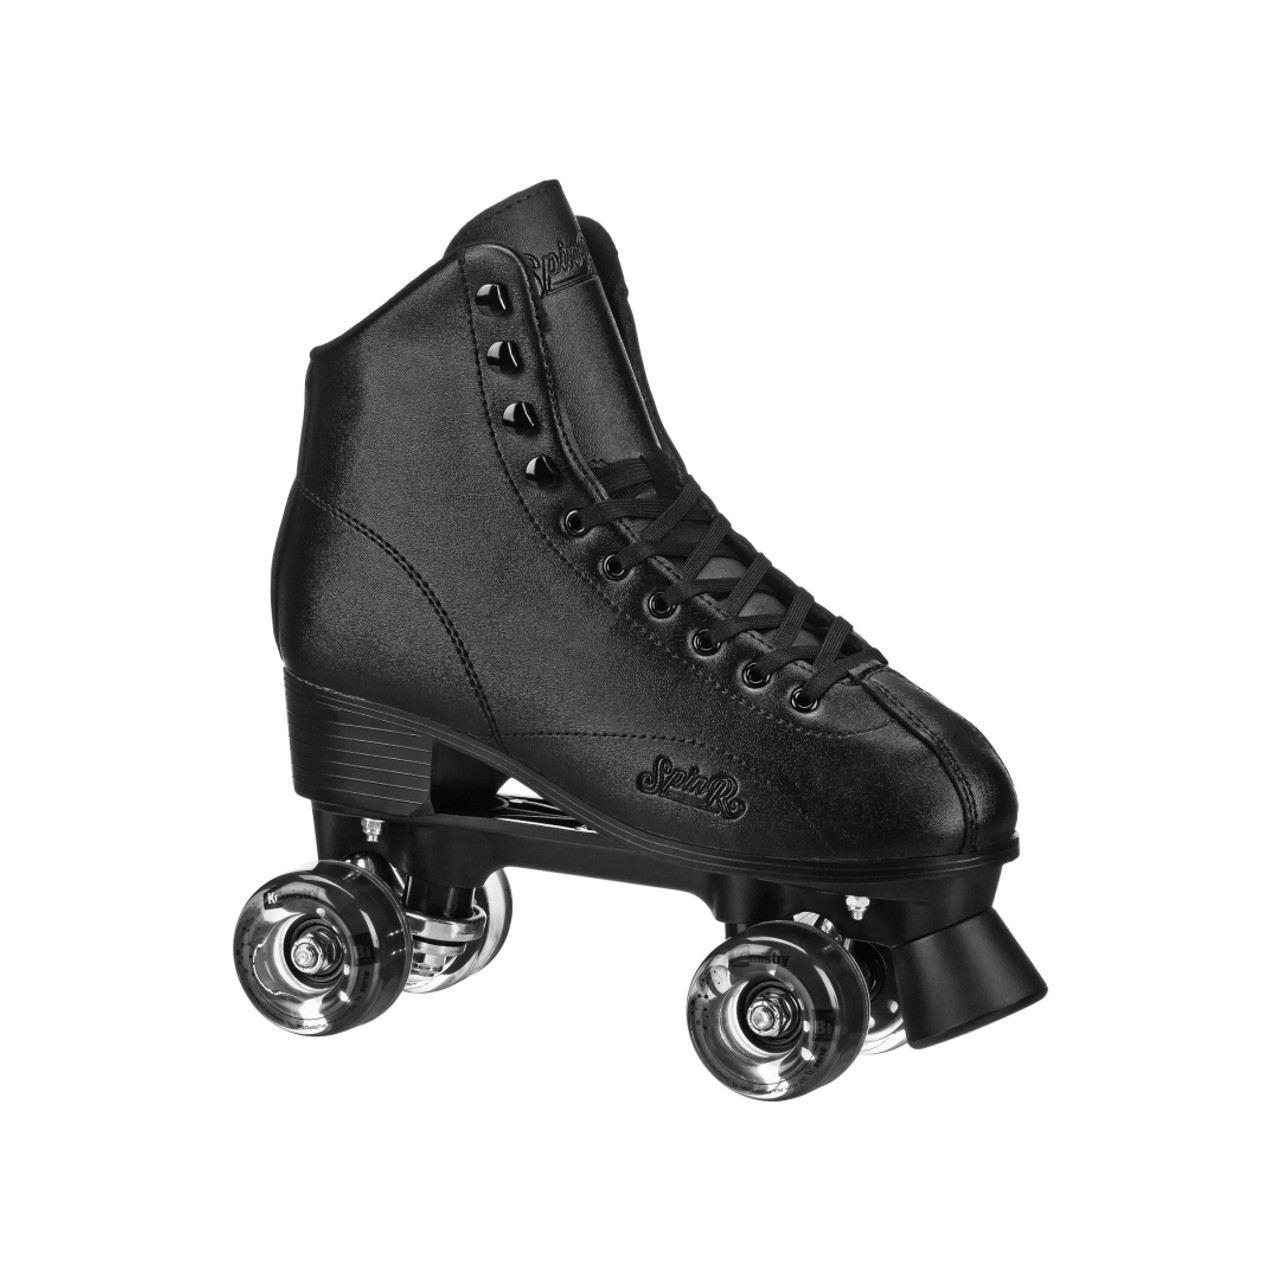 SpinR Roller Skates | RollerSkateNation.com